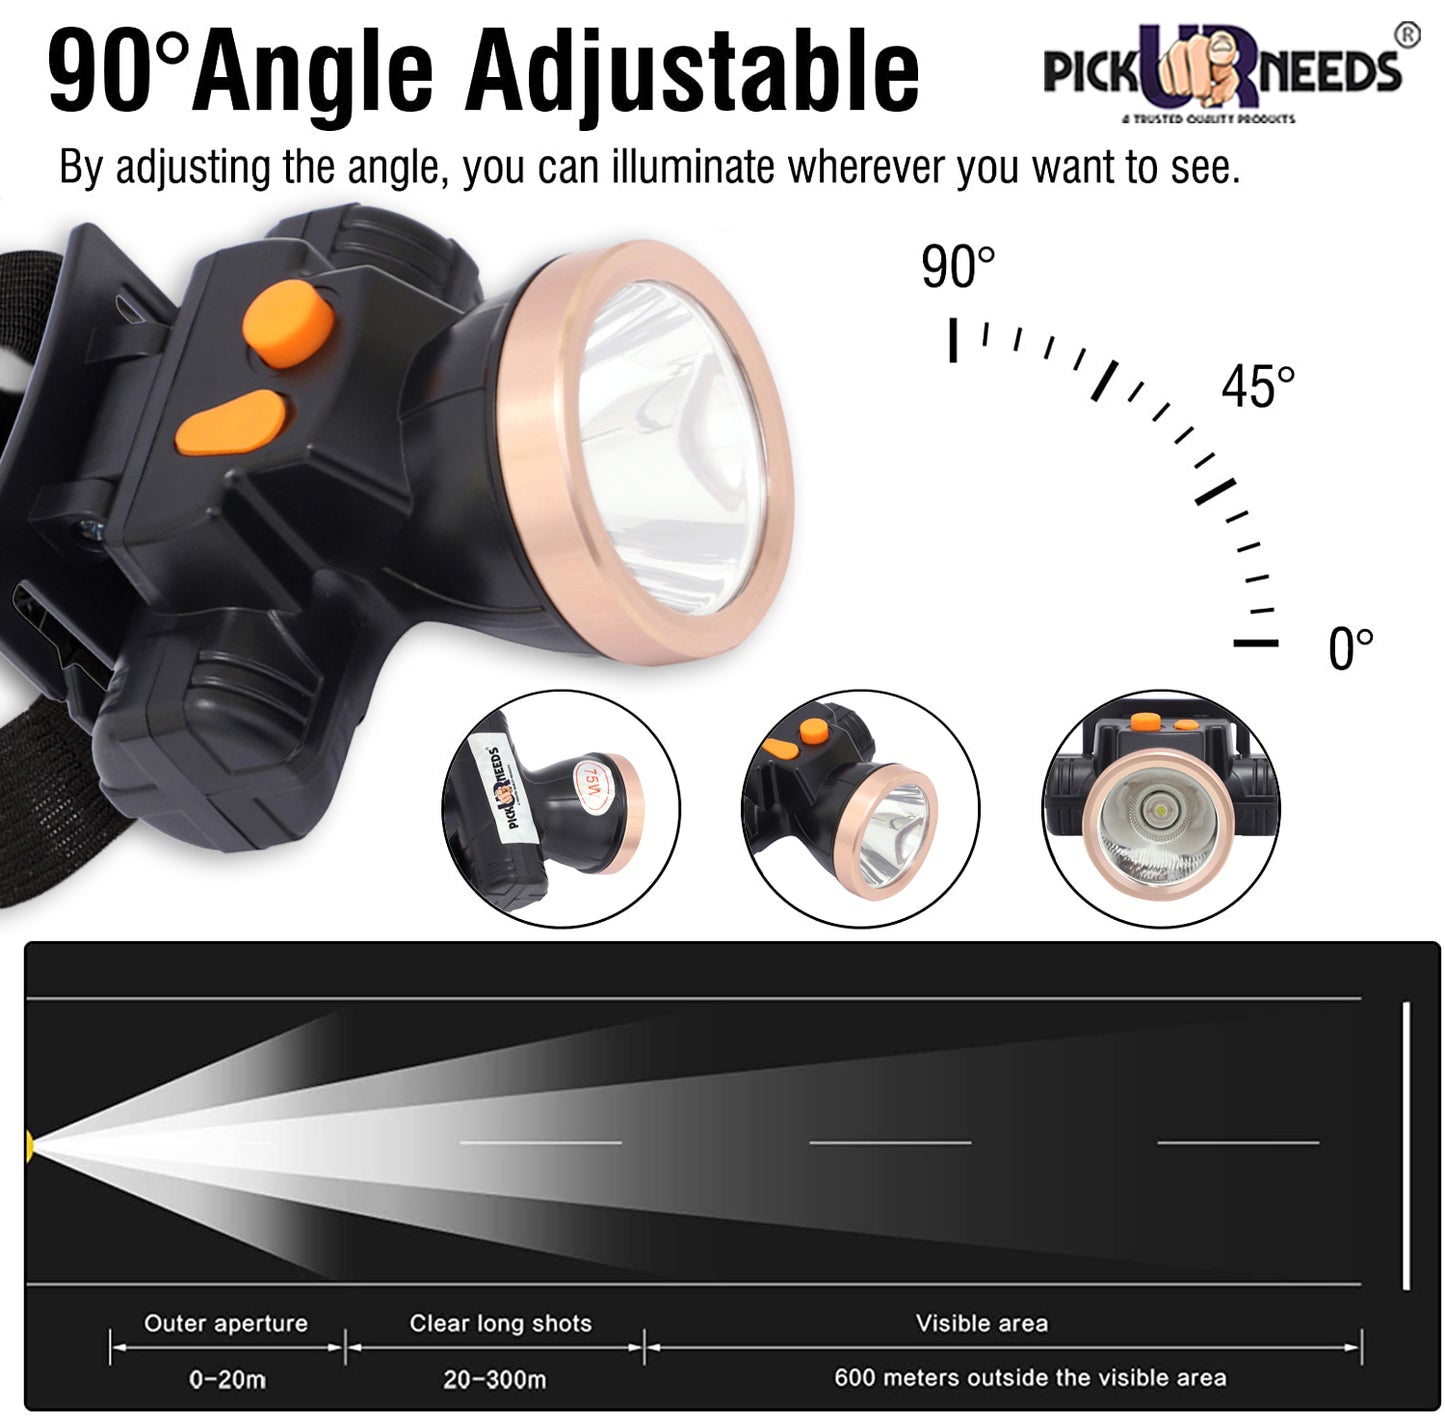 Pick Ur Needs Rechargeable Adjustable Headlamp Long Range High Power LED Emergency Torch Light (50Watt)